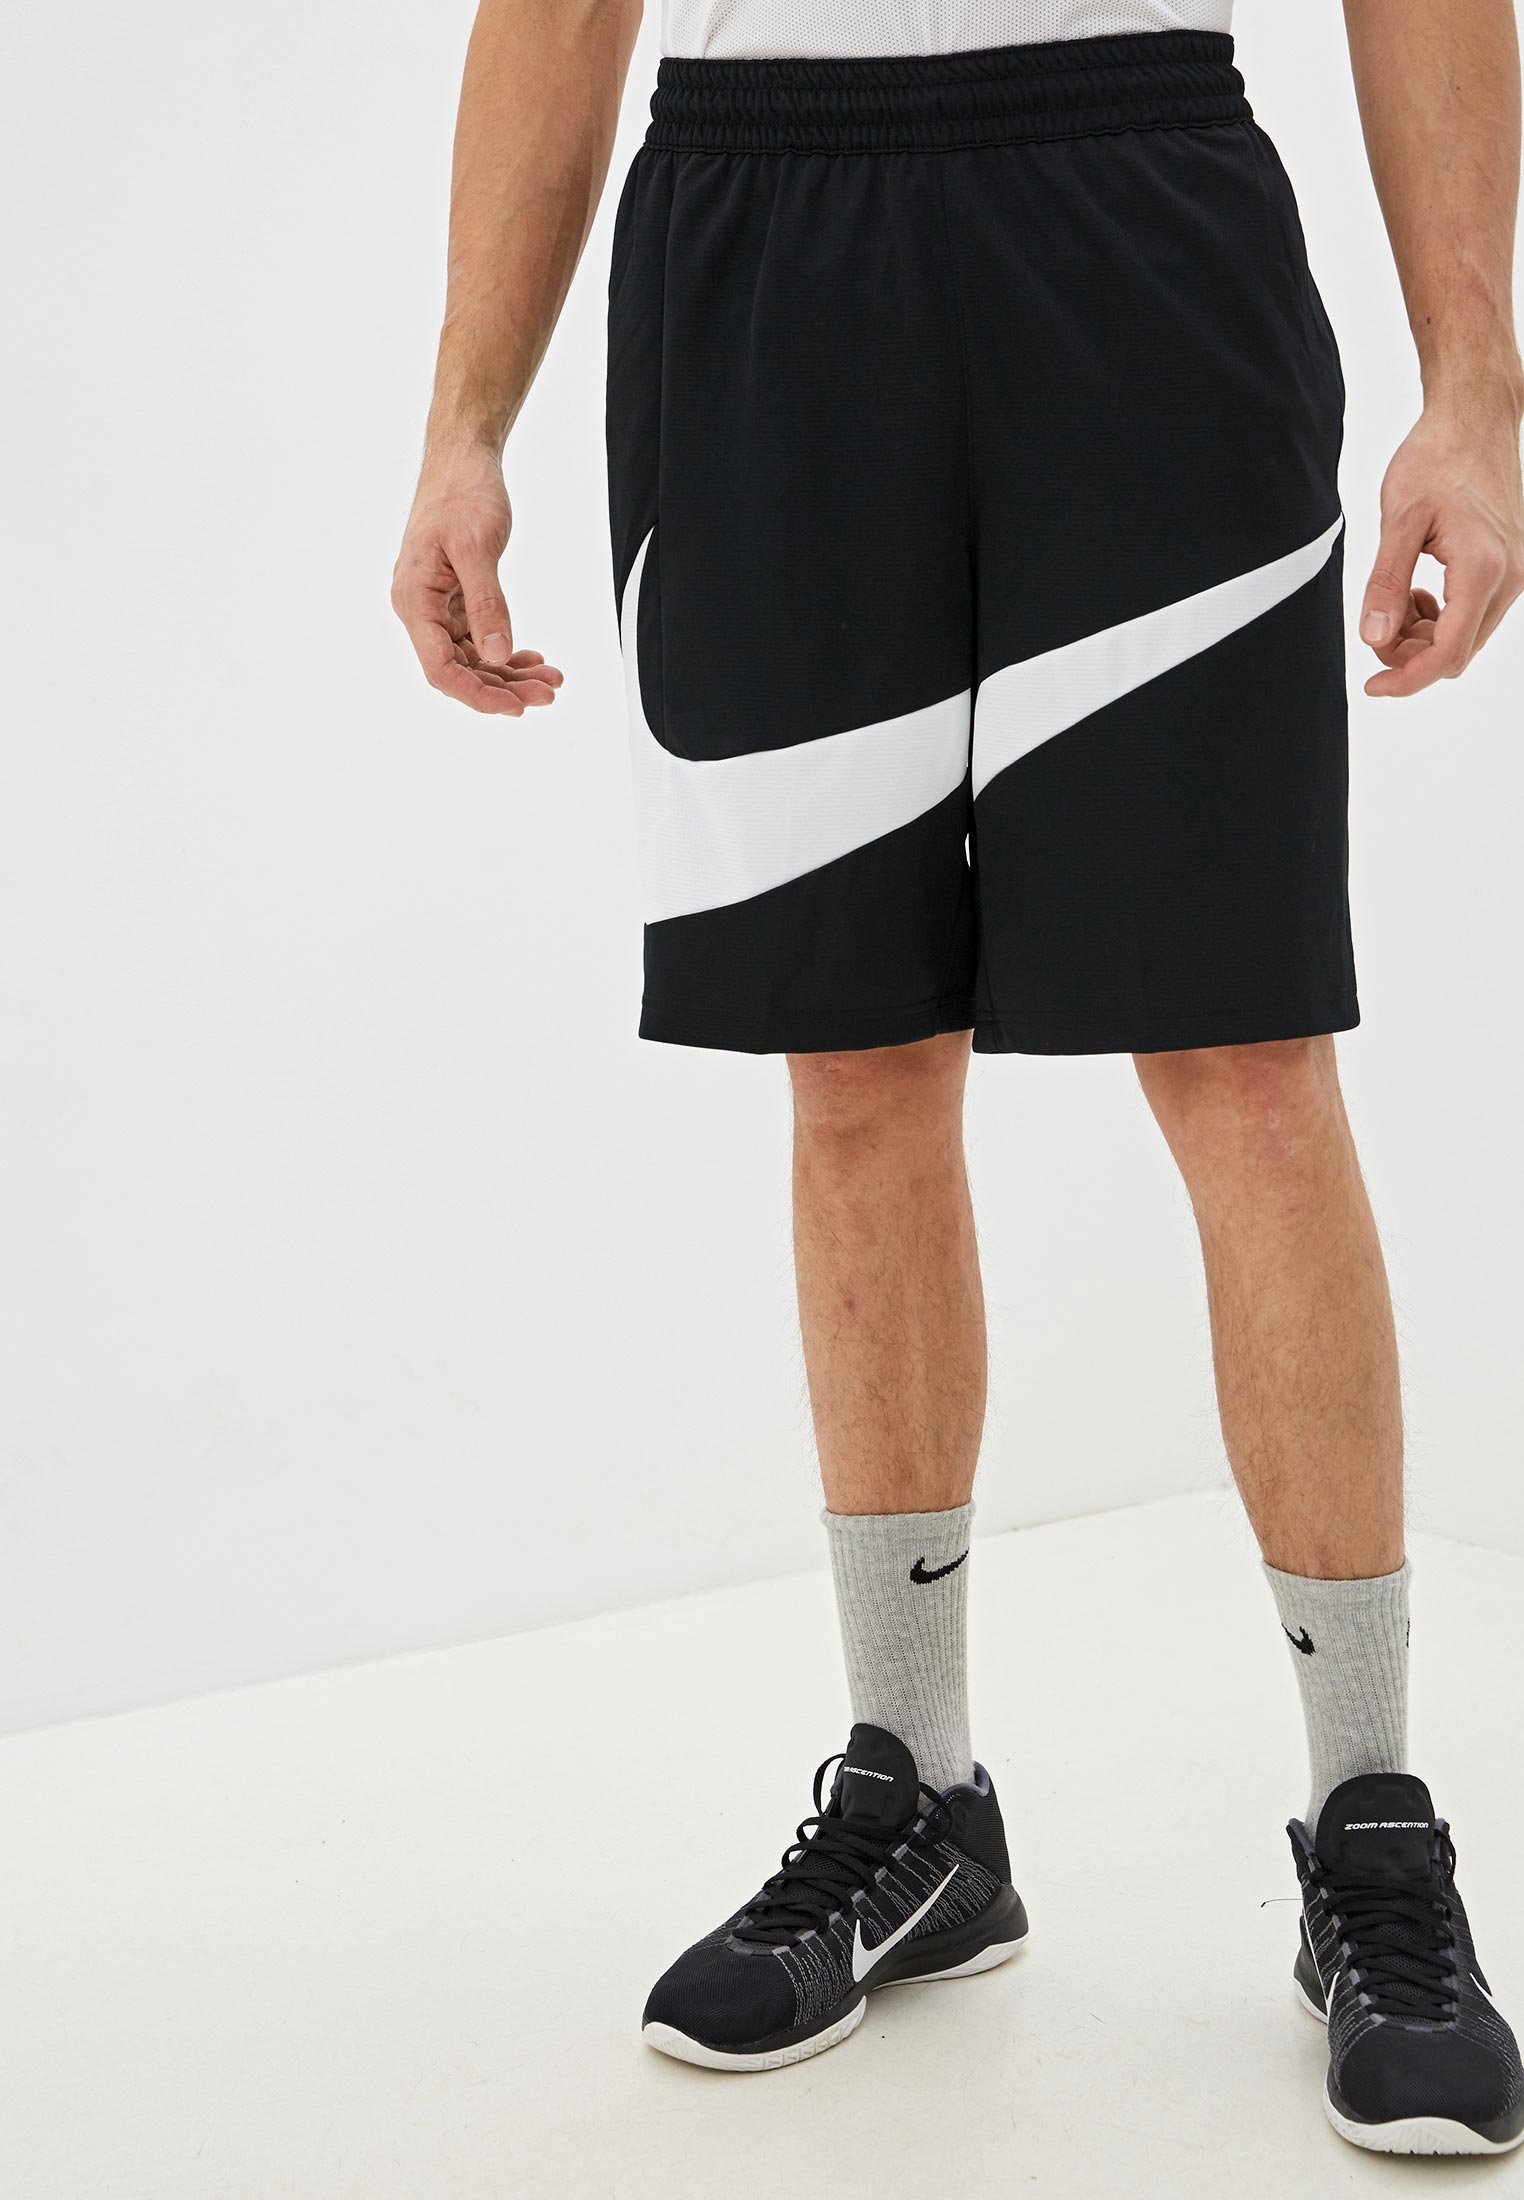 Nike Dri Fit hbr 2.0 шорты черные